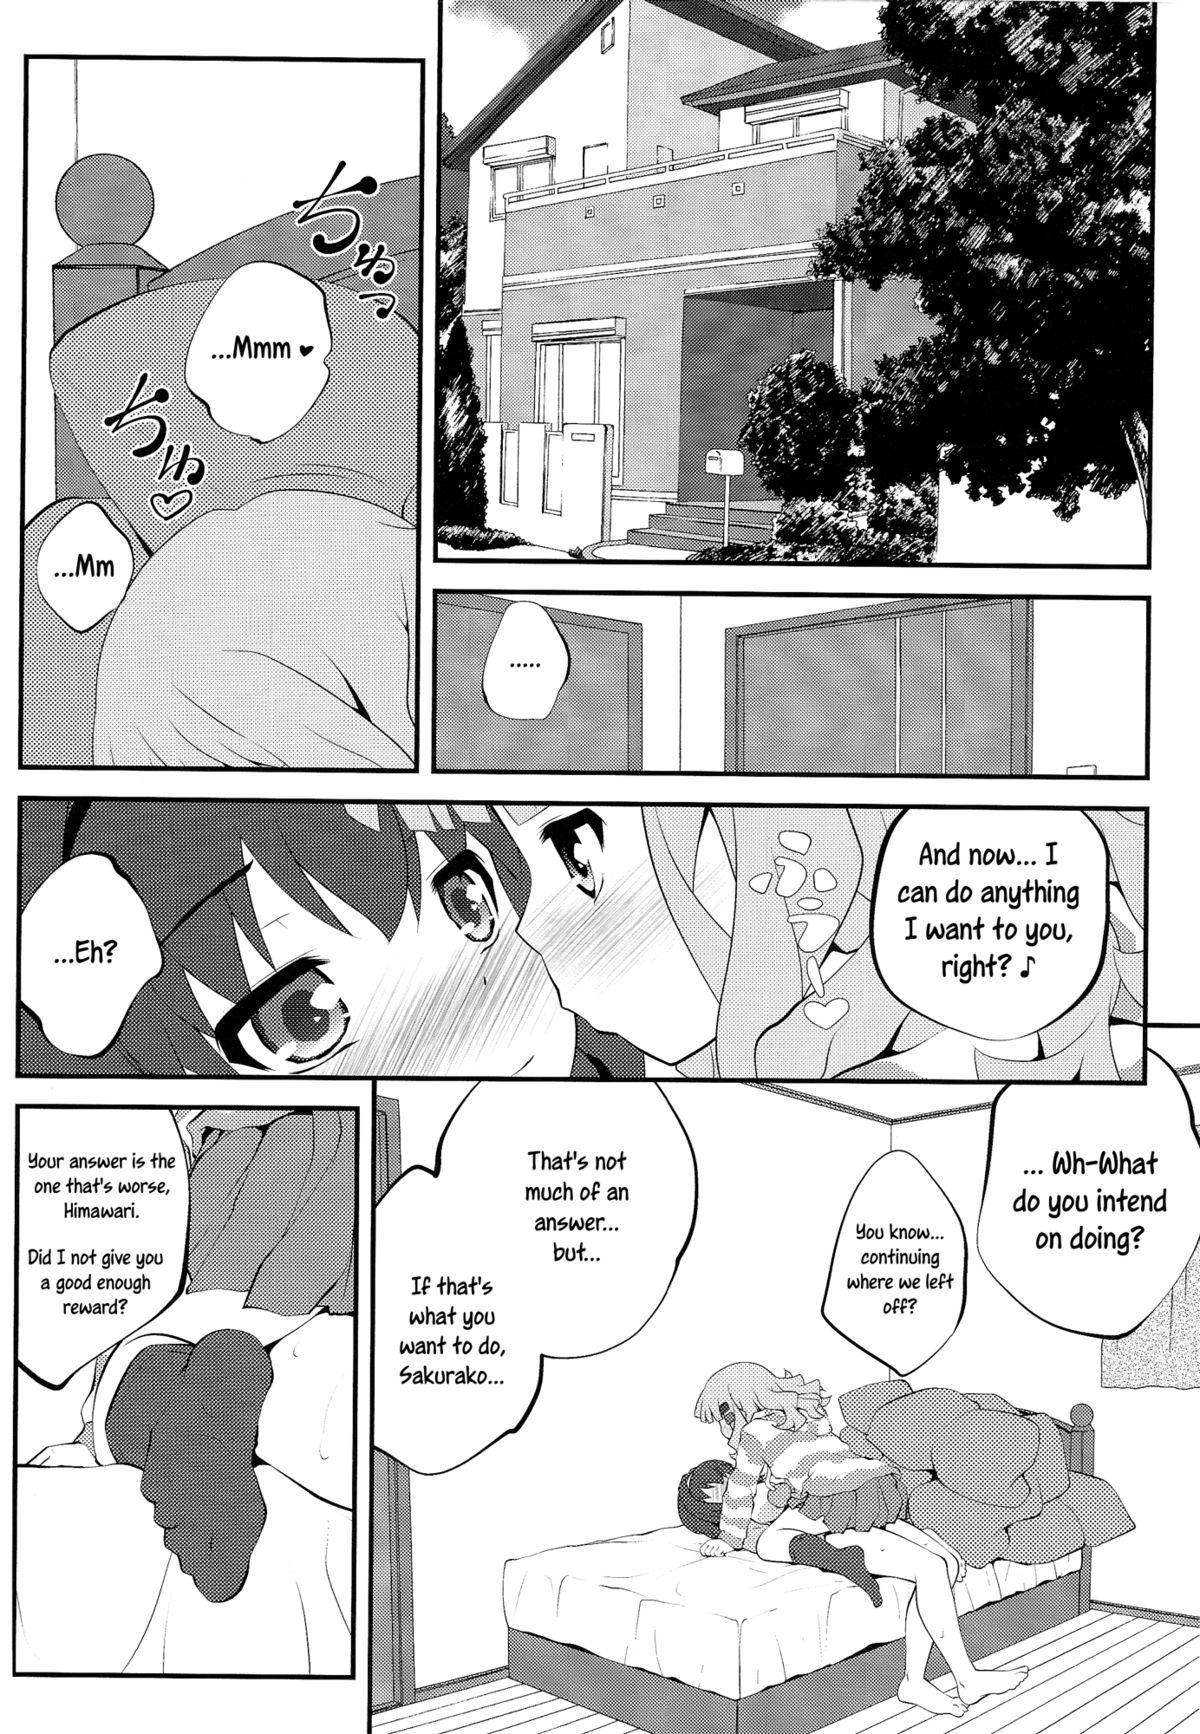 Gang Himegoto Flowers 7 - Yuruyuri Fingers - Page 3